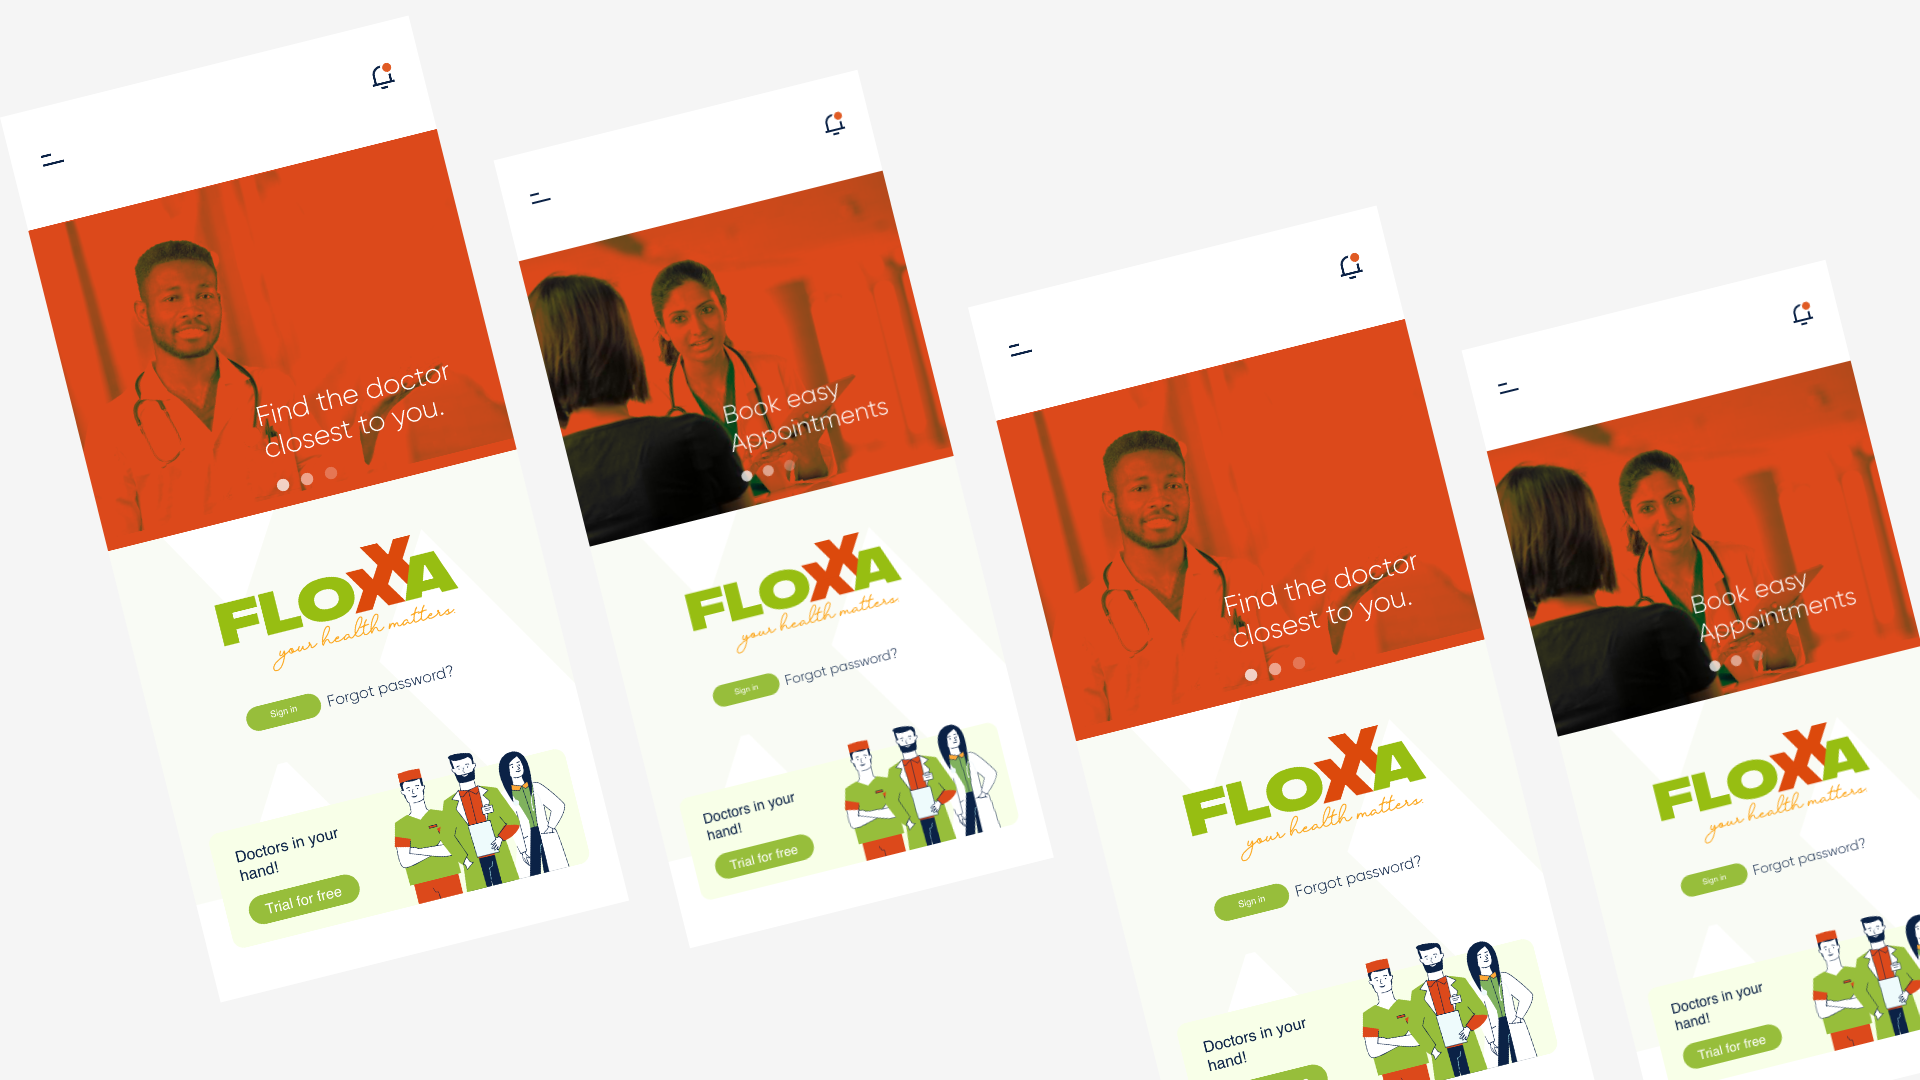 Floxxa health app